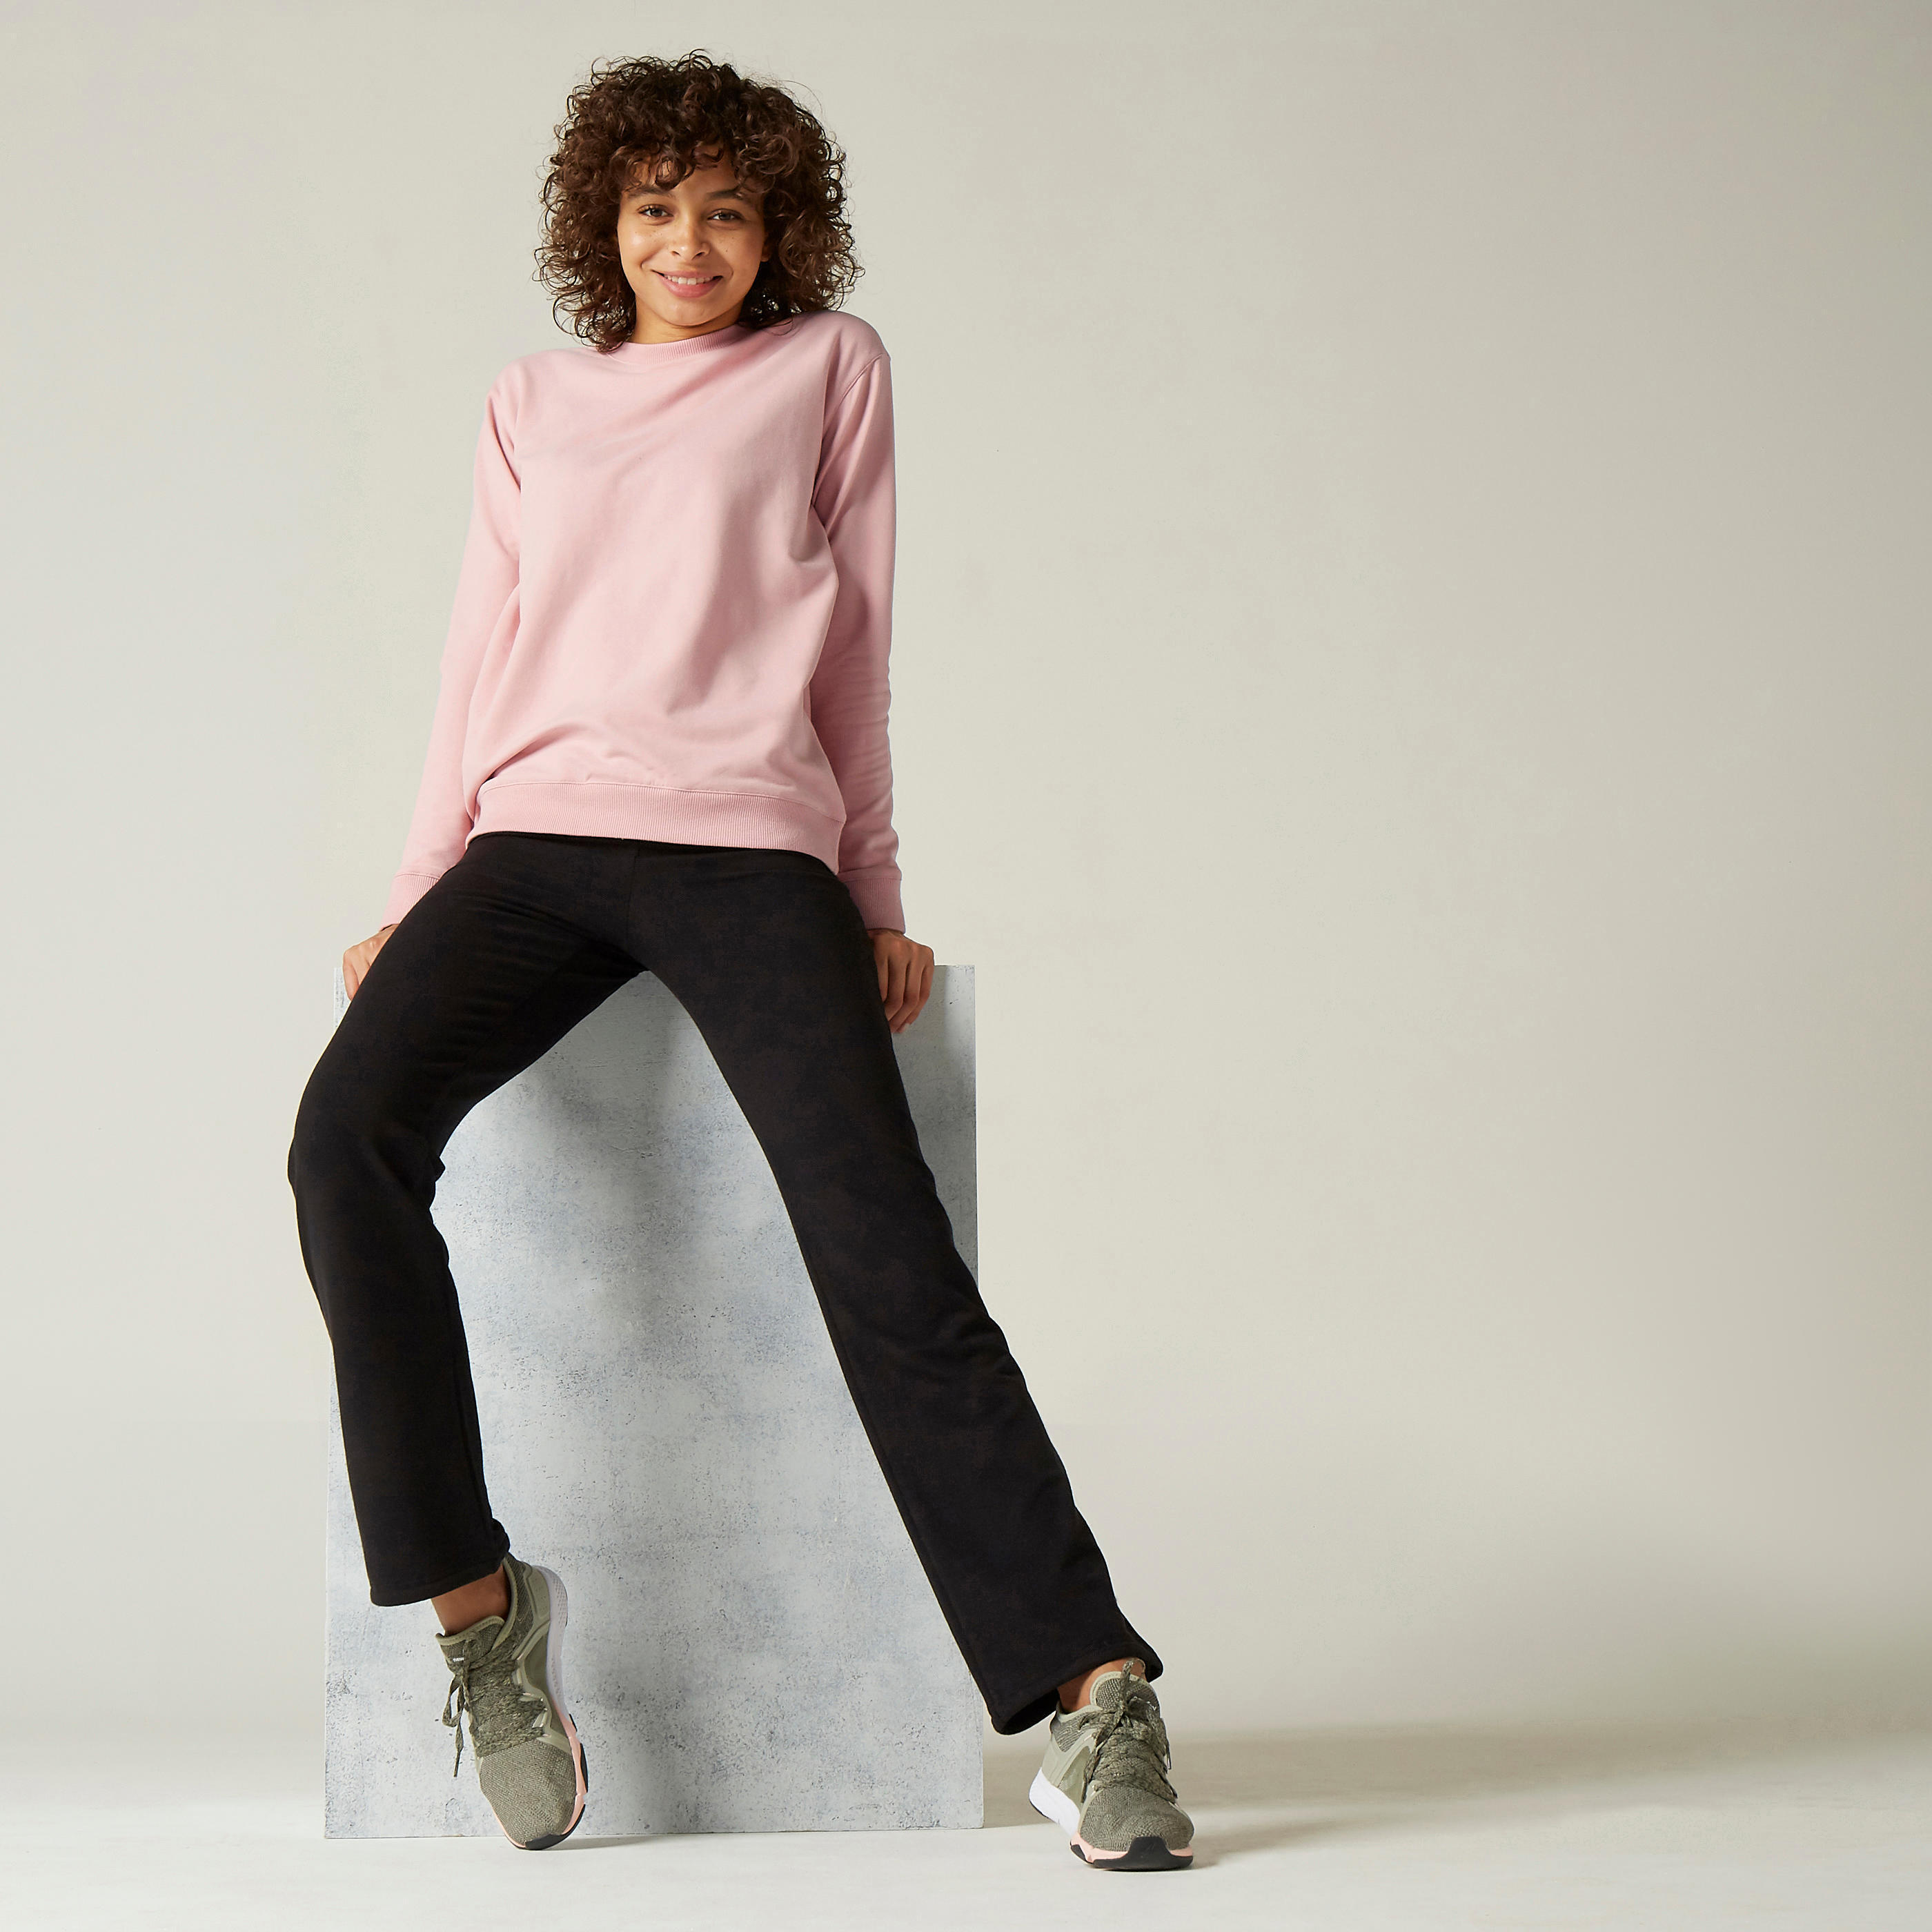 Refurbished Womens Fitness Sweatshirt 100-Pink - A Grade 3/6